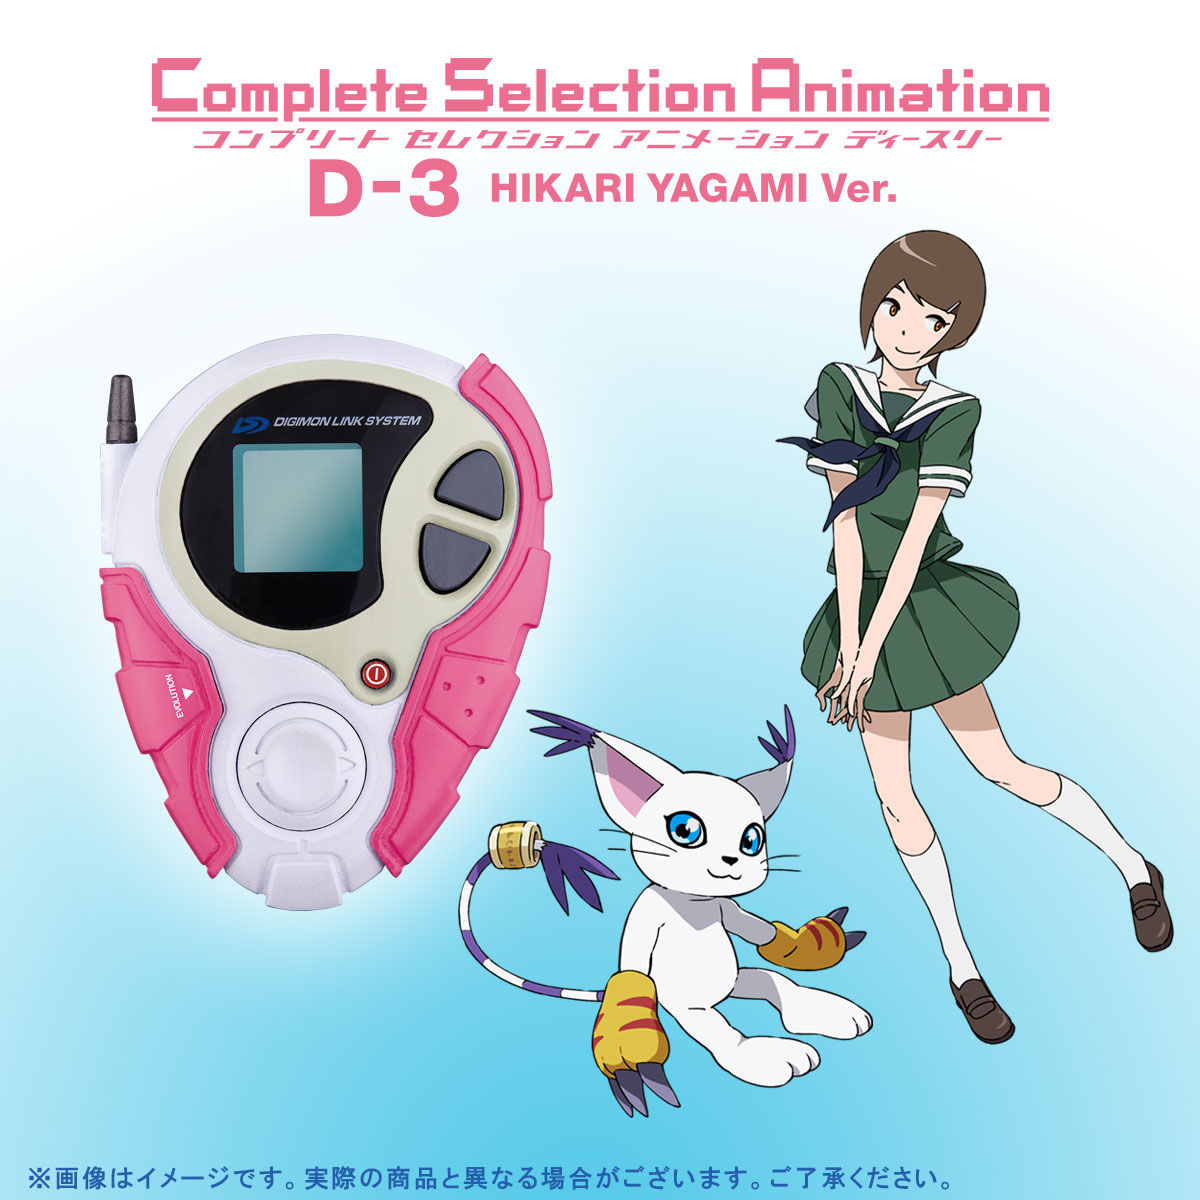 Commission for PokemonMasta123 . #digimon #digimontri #digimonadventure # digimonadventuretri #デジモン #デジモンアドベンチャー #デジモンアドベンチャーtri #commission